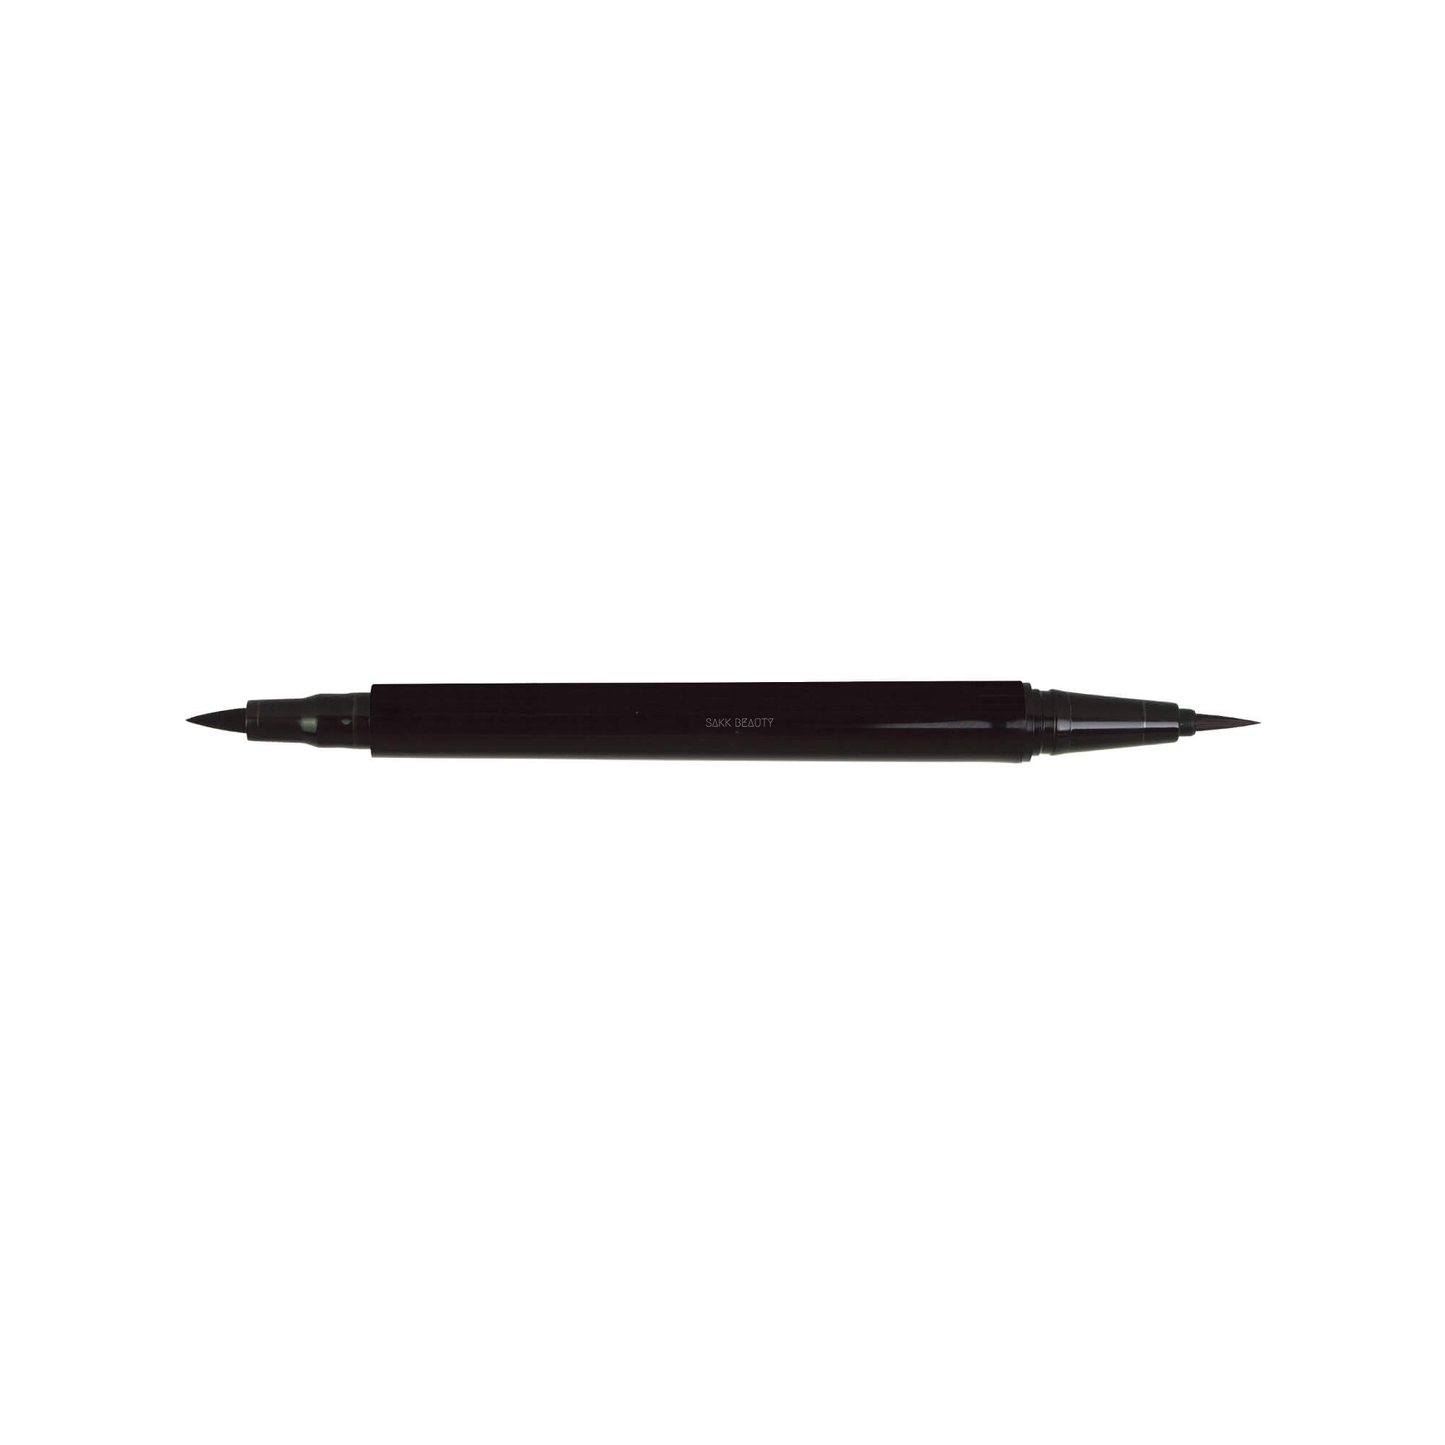 Dual Tip Eye Definer Pen - Black sakkstyles.com